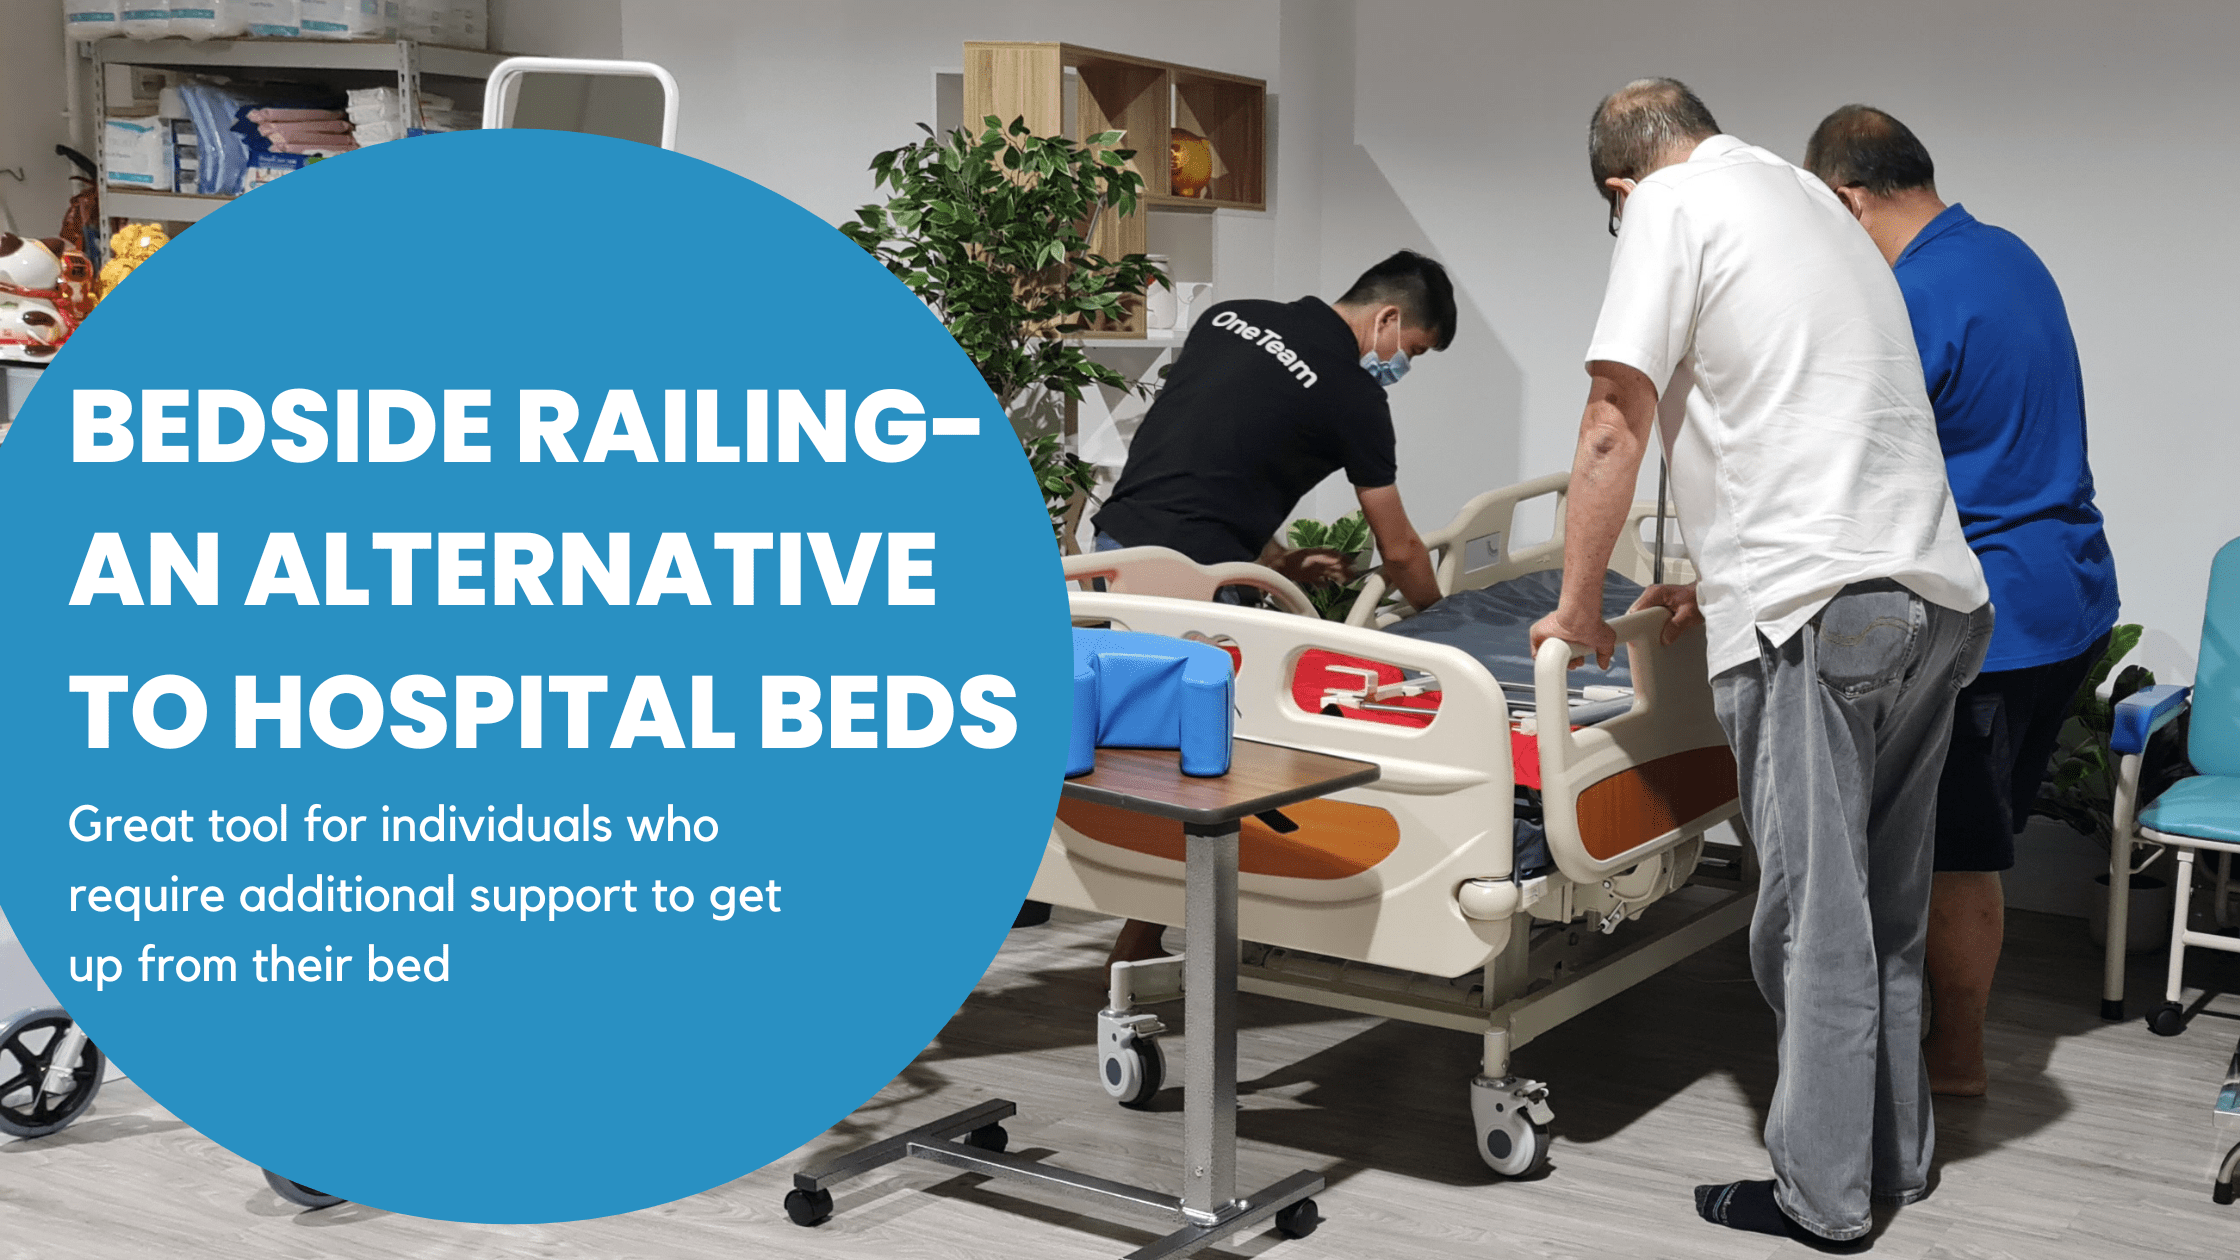 Bedside railing - an alternative to hospital bed